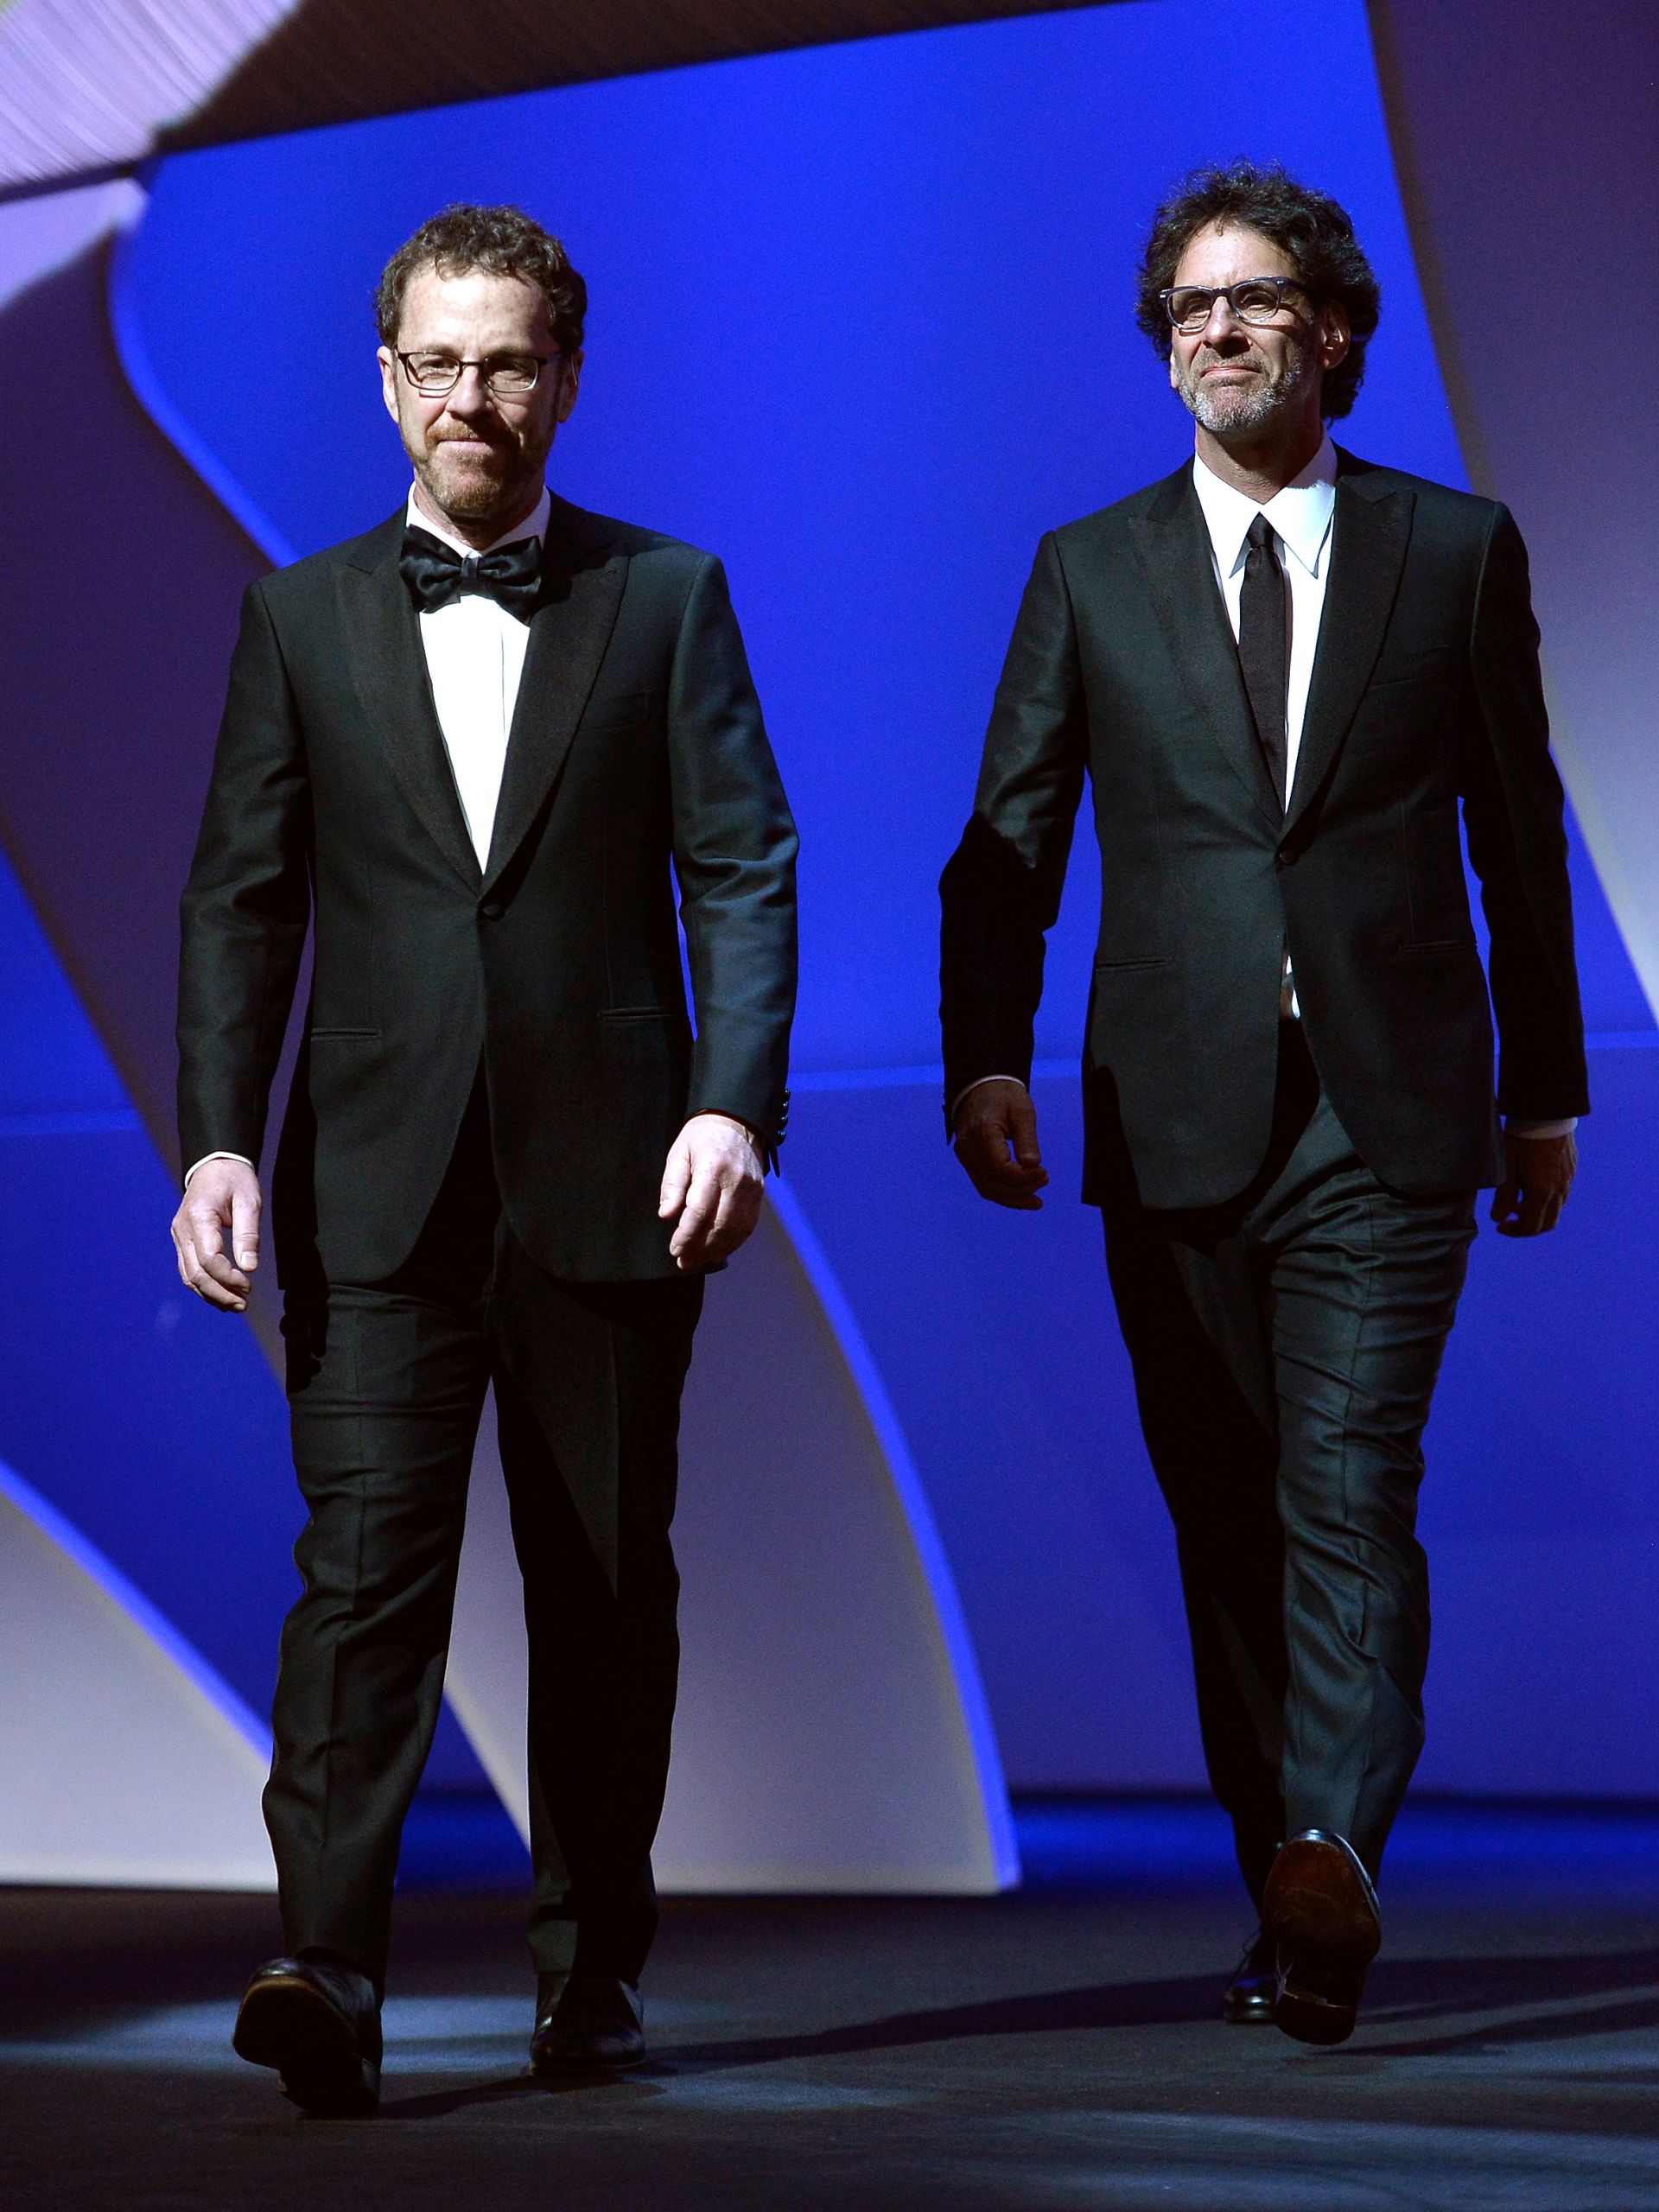 Ethann i Joel Coen, predsjednici žirija. FOTO: Pascal Le Segretain/Getty Images